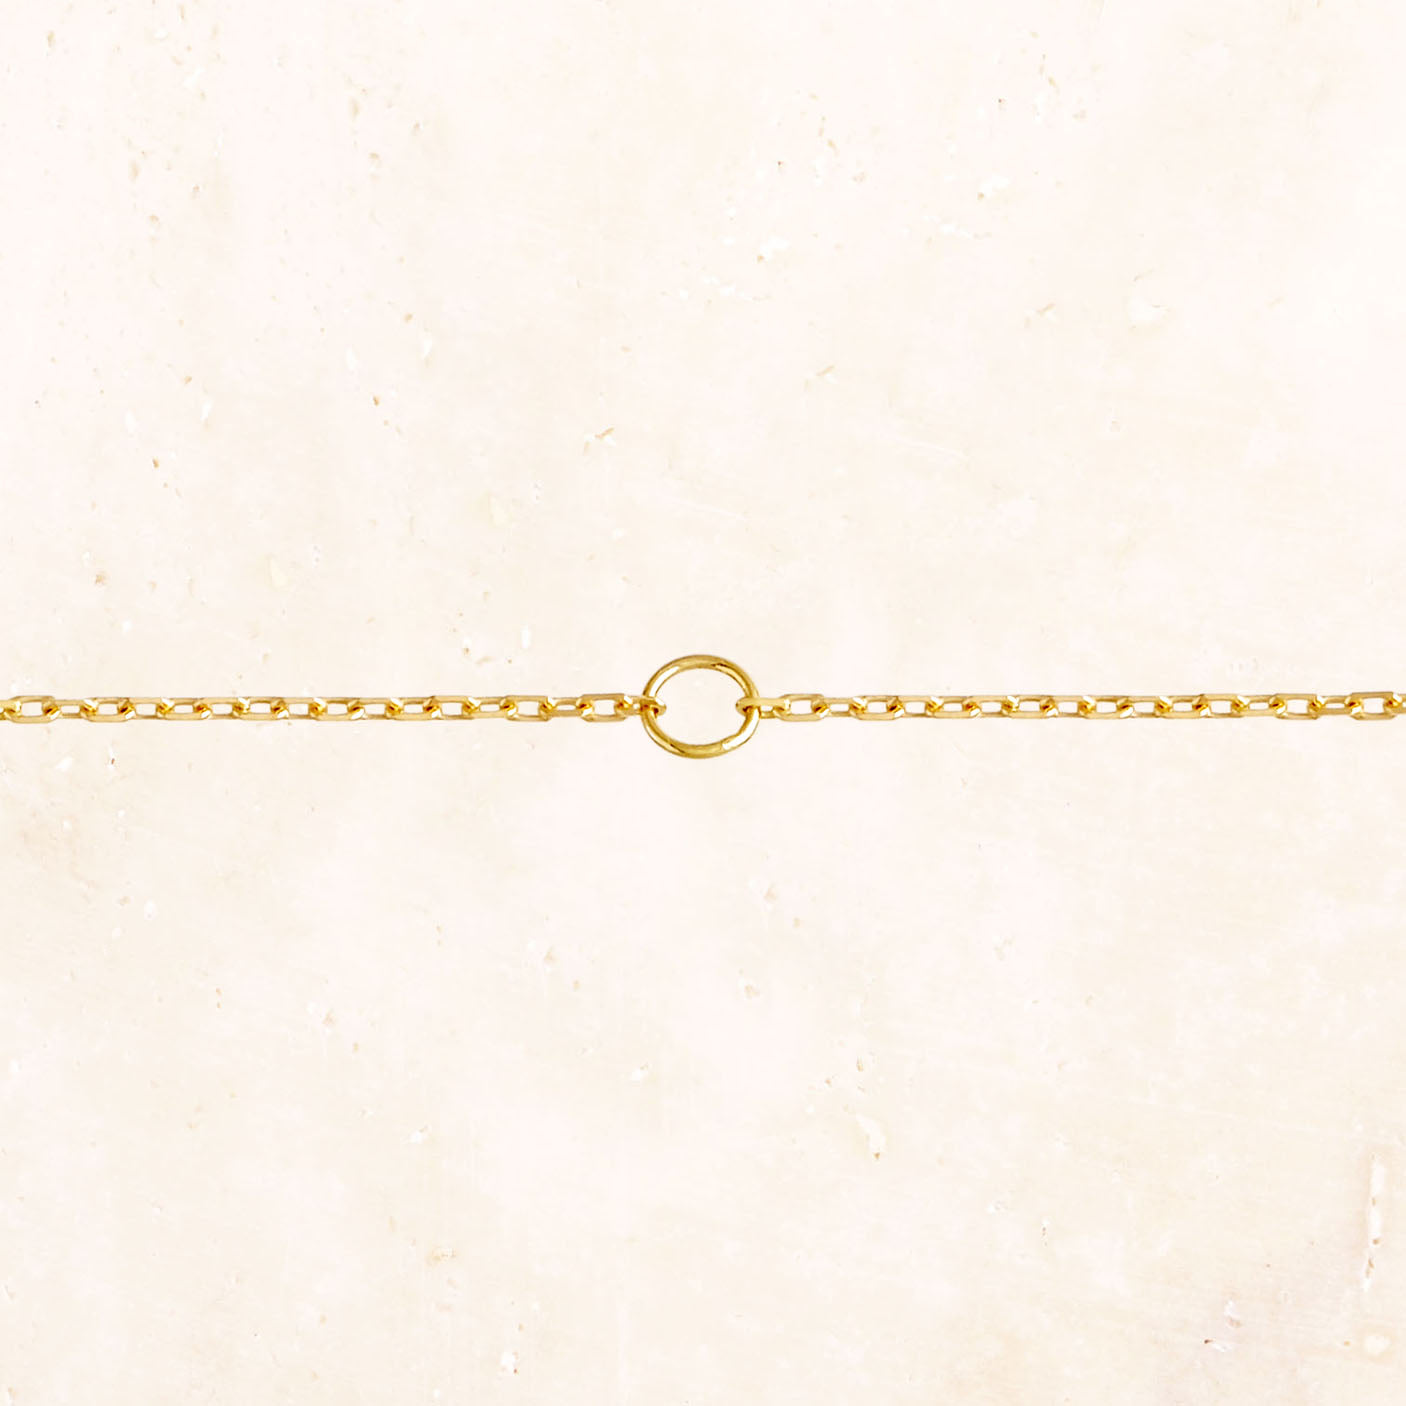 10K Gold Chain Necklace 45cm